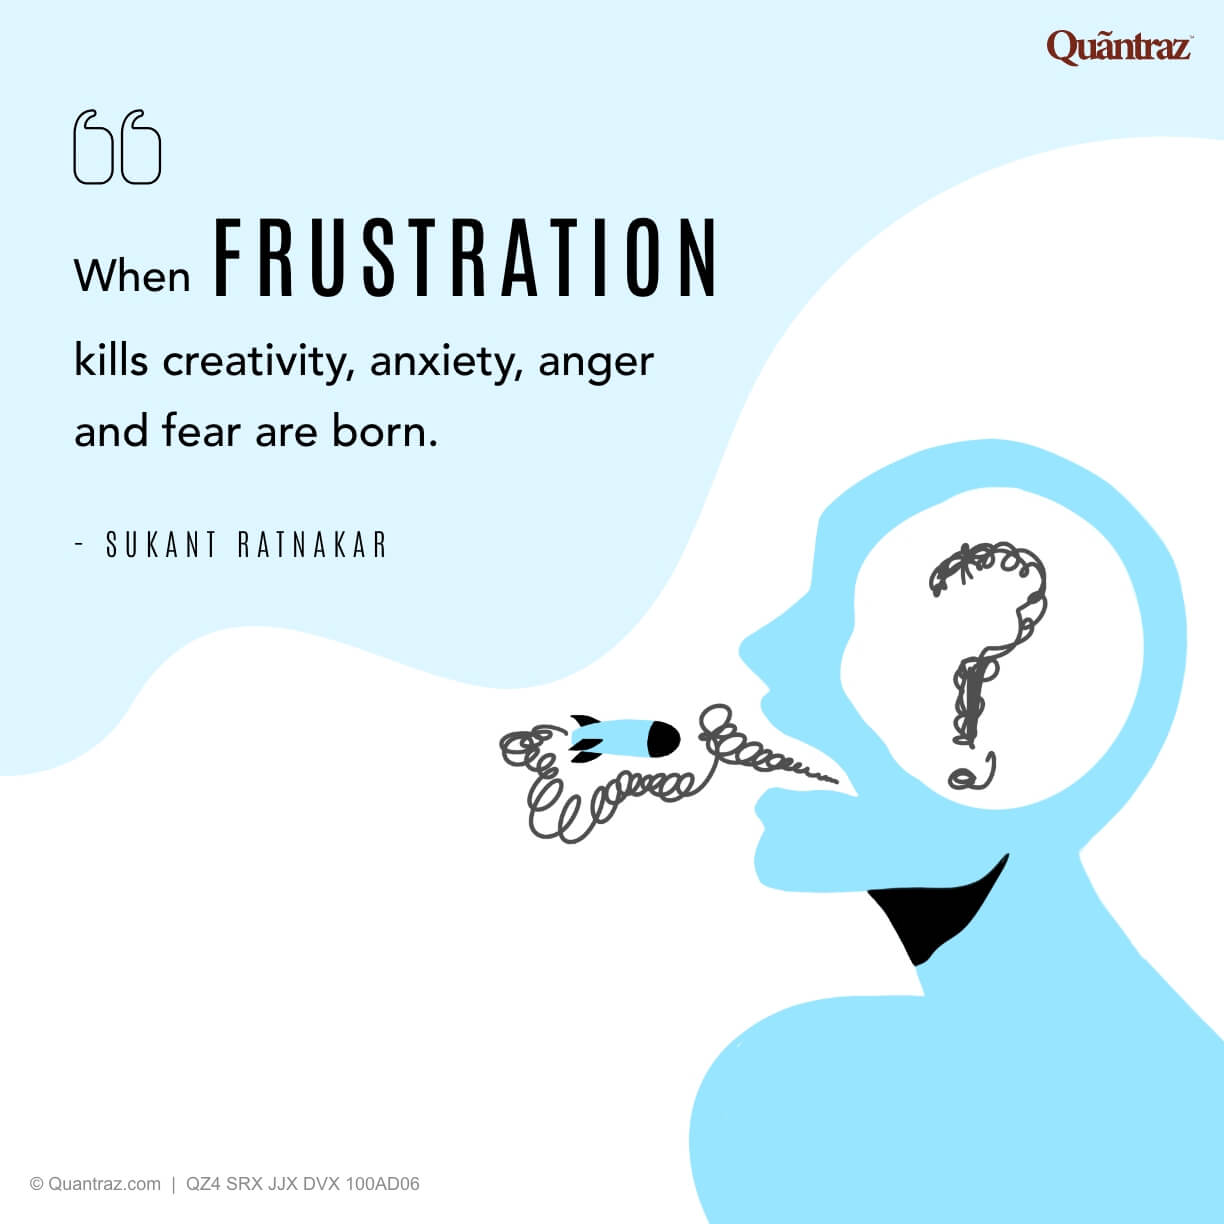 When frustration kills